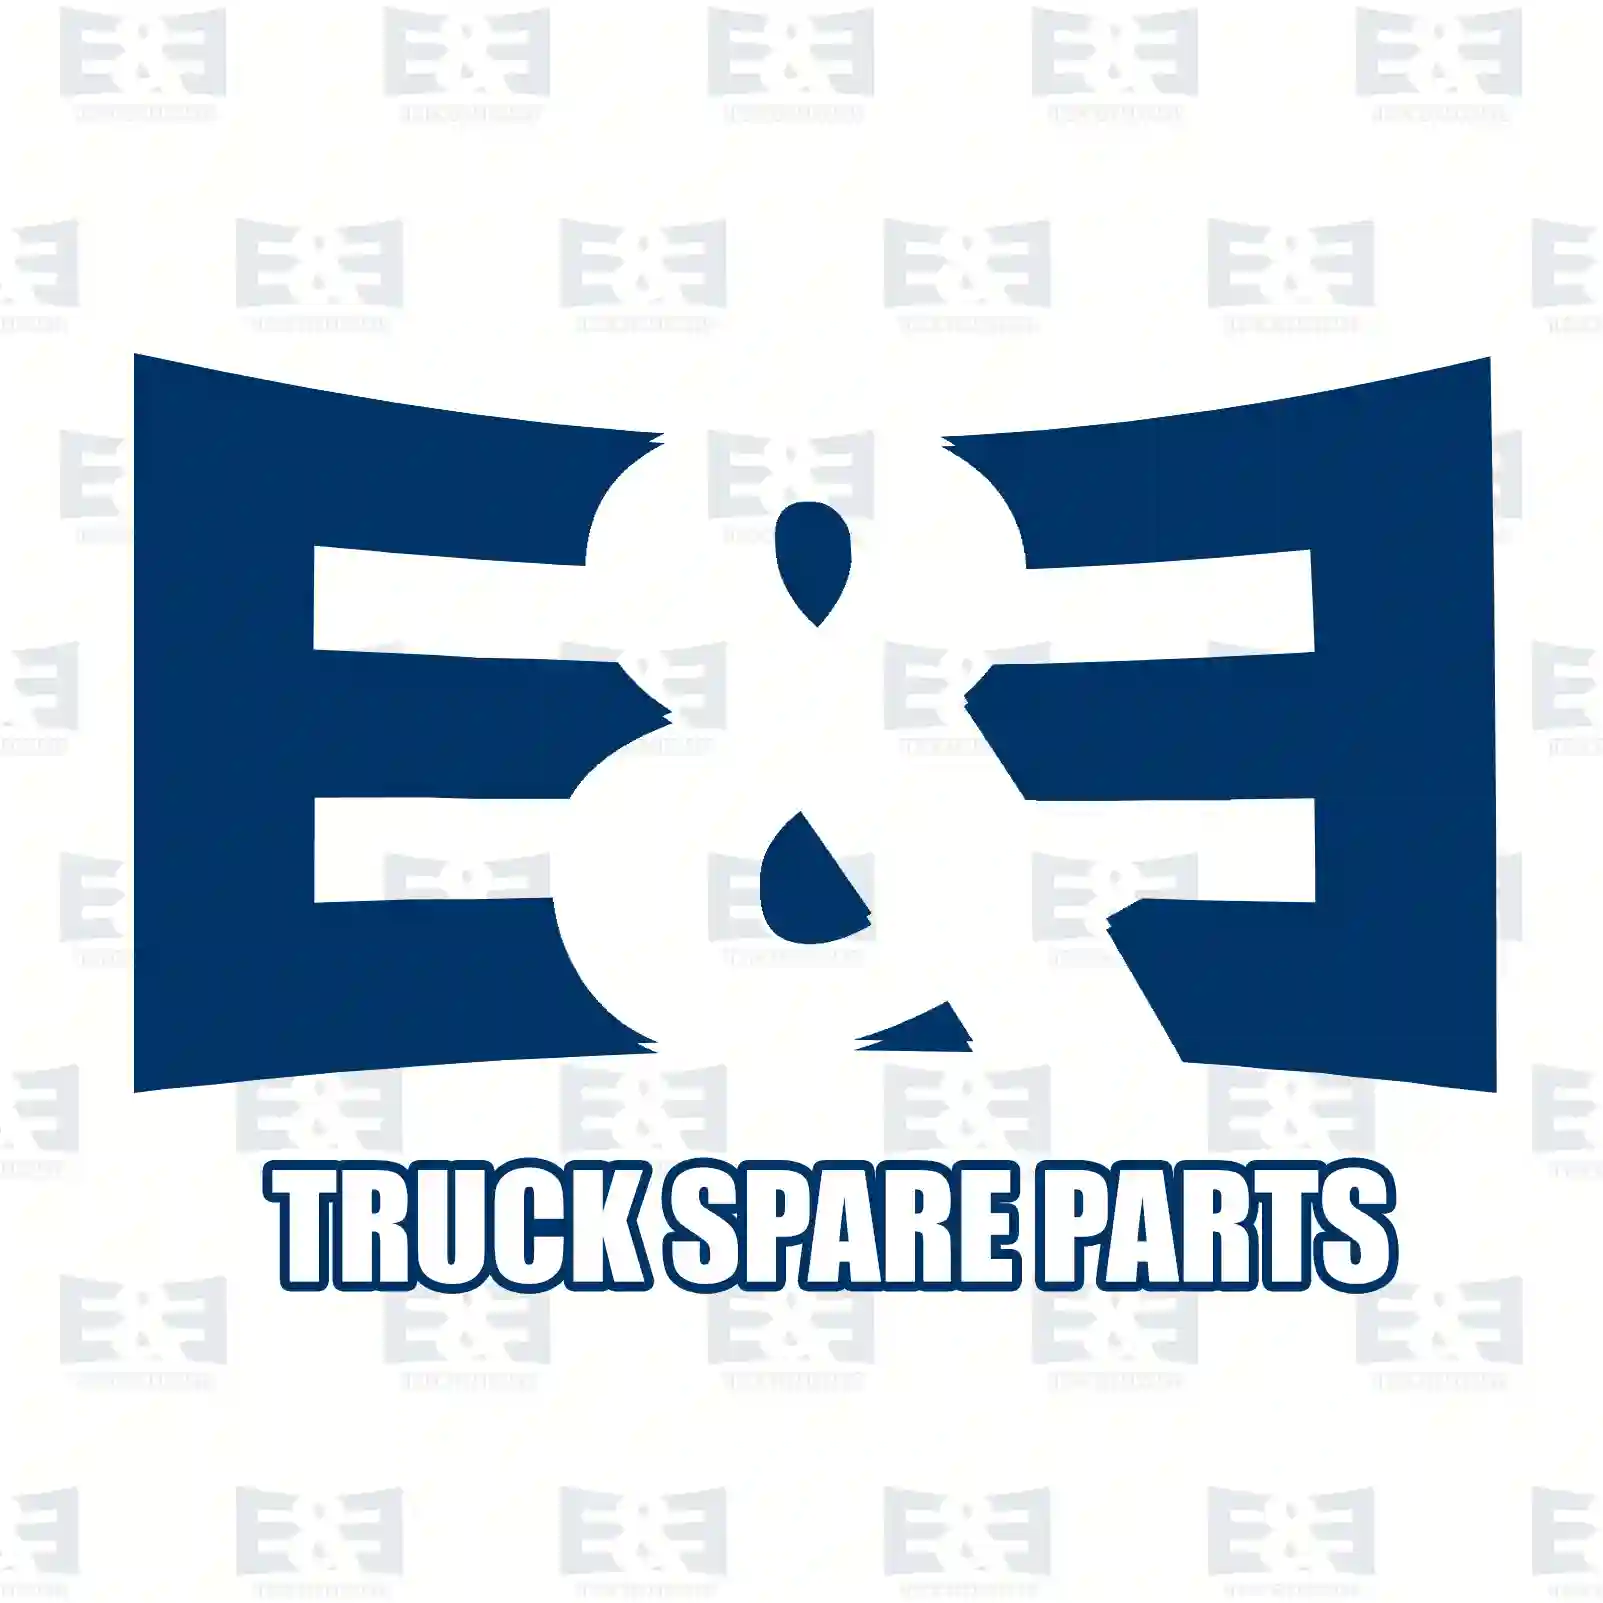 Axles Oil seal, EE No 2E2270538 ,  oem no:06562790031, 06562790080, 81965010906, 81965026017, 87661692801, 0069979646, 0089979646, ZG02685-0008 E&E Truck Spare Parts | Truck Spare Parts, Auotomotive Spare Parts